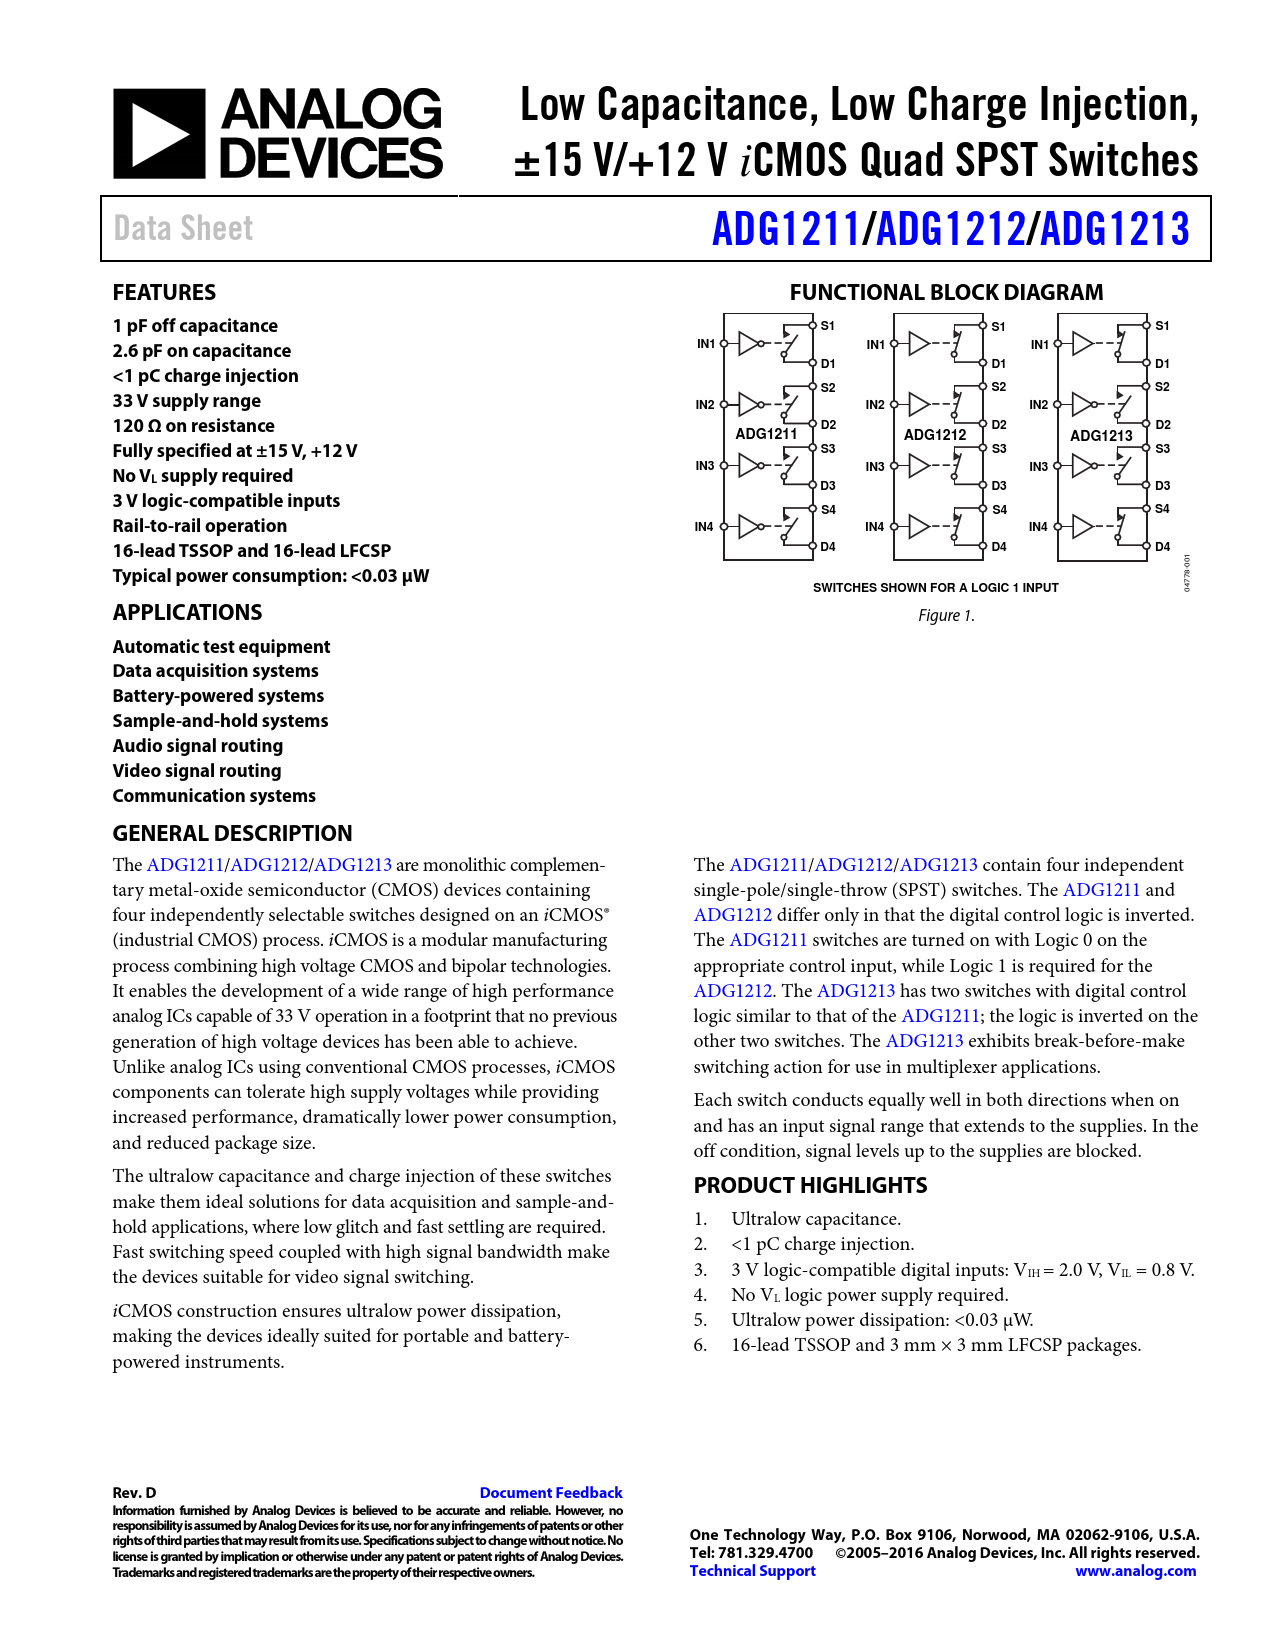 Datasheet ADG1211, ADG1212, ADG1213 Analog Devices, Версия: D